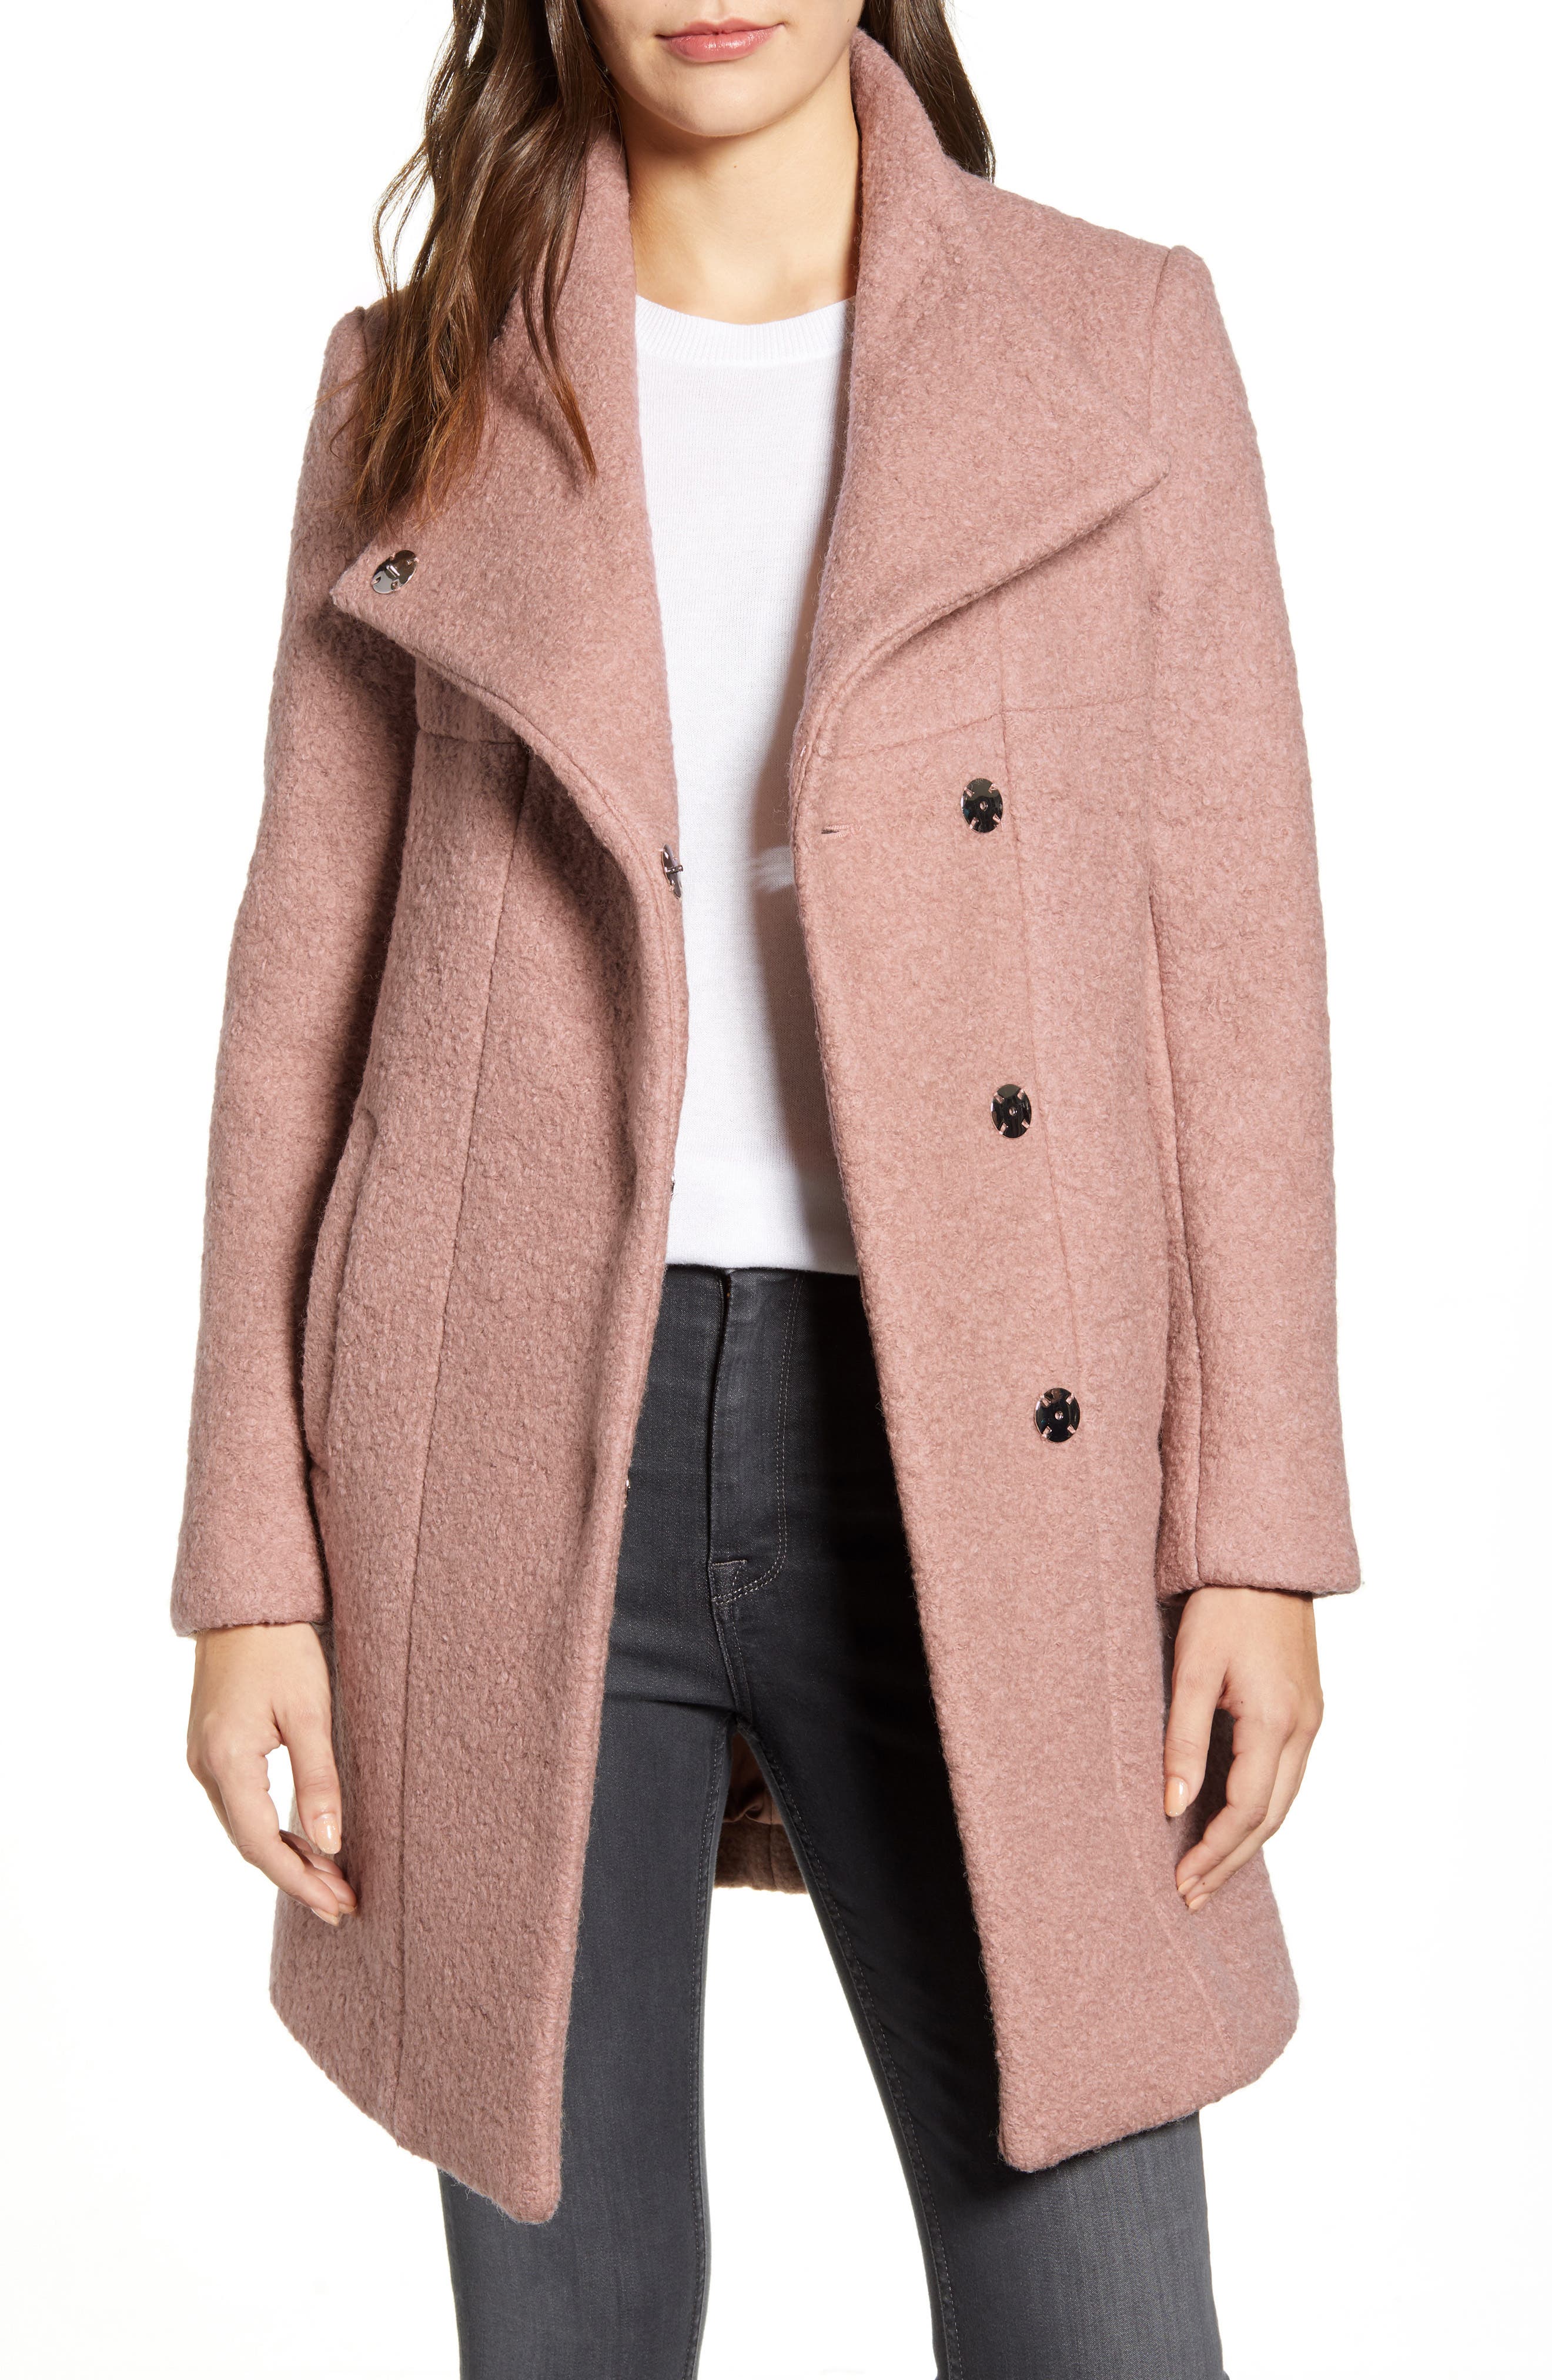 hot pink womens coat